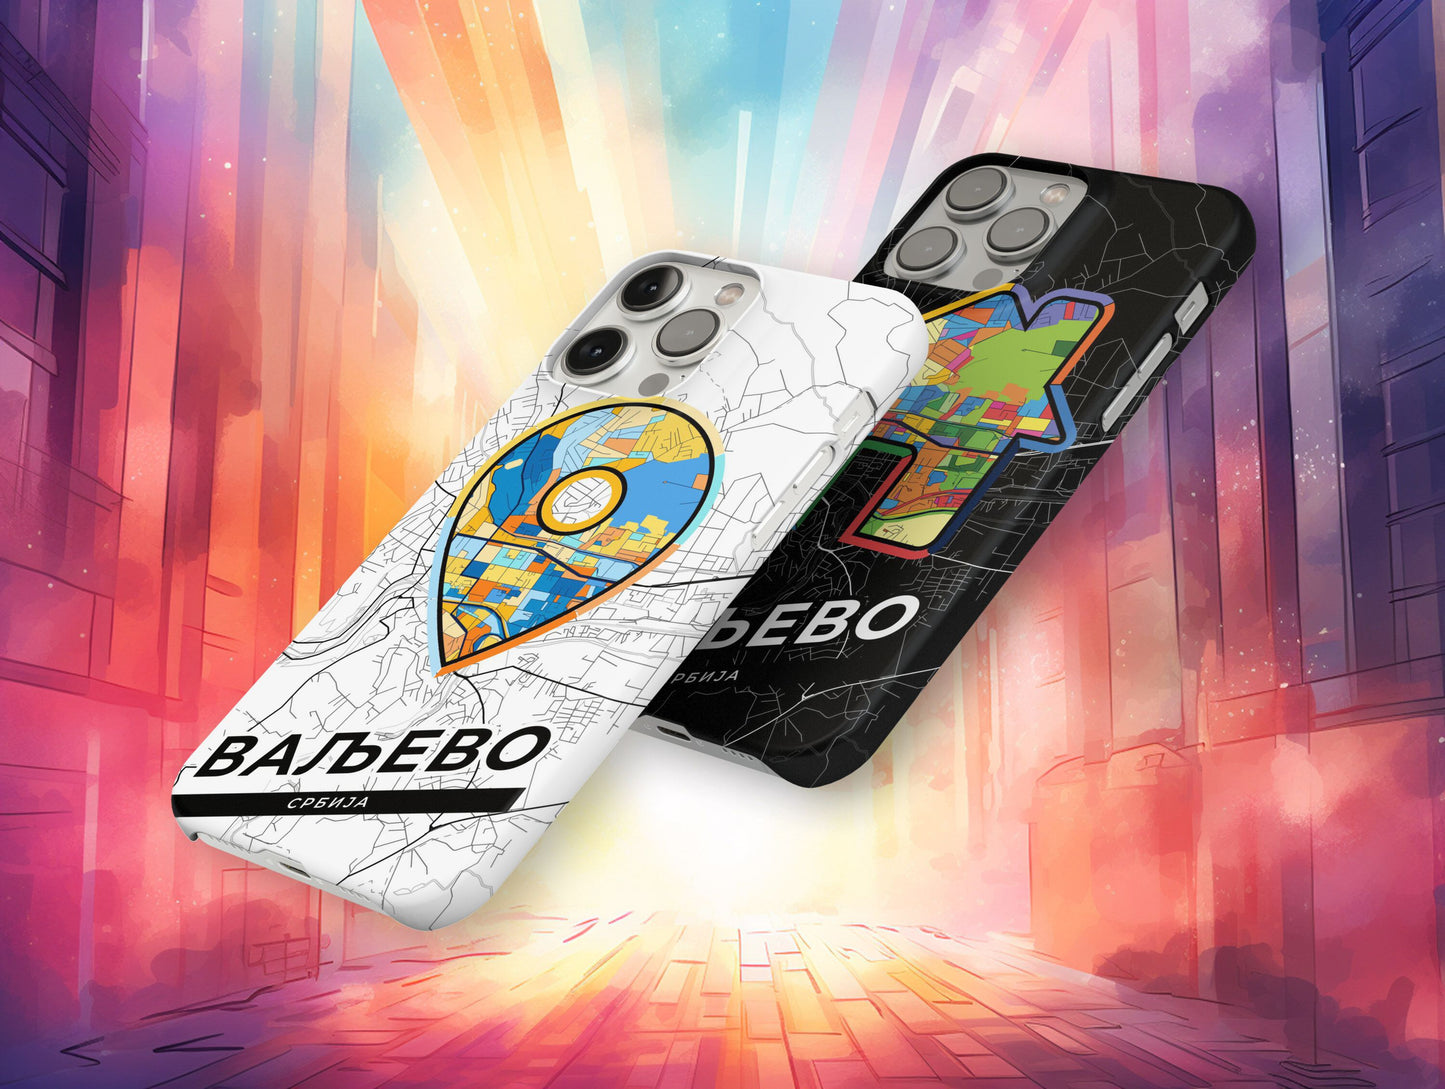 Valjevo Serbia slim phone case with colorful icon